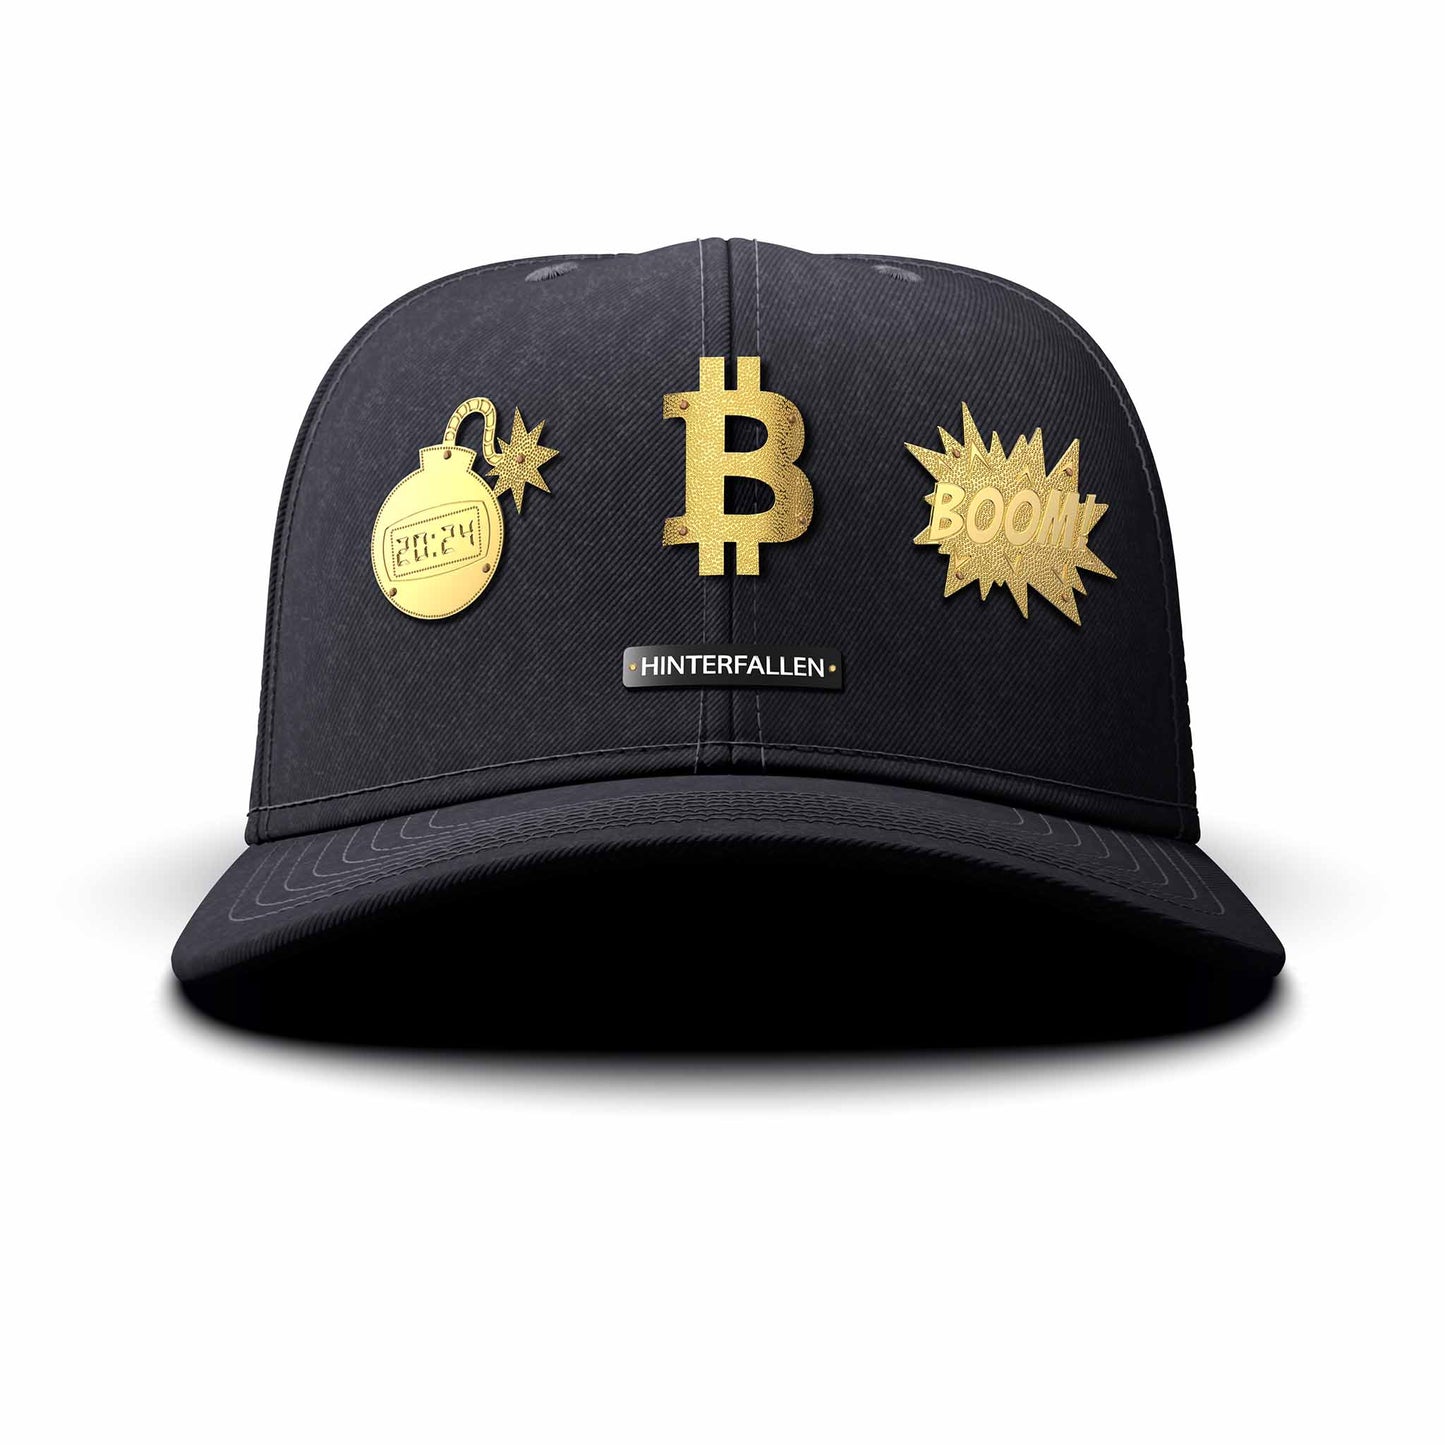 Bitcoin, Tik Tik Boom - Triple Gold Charm, curved